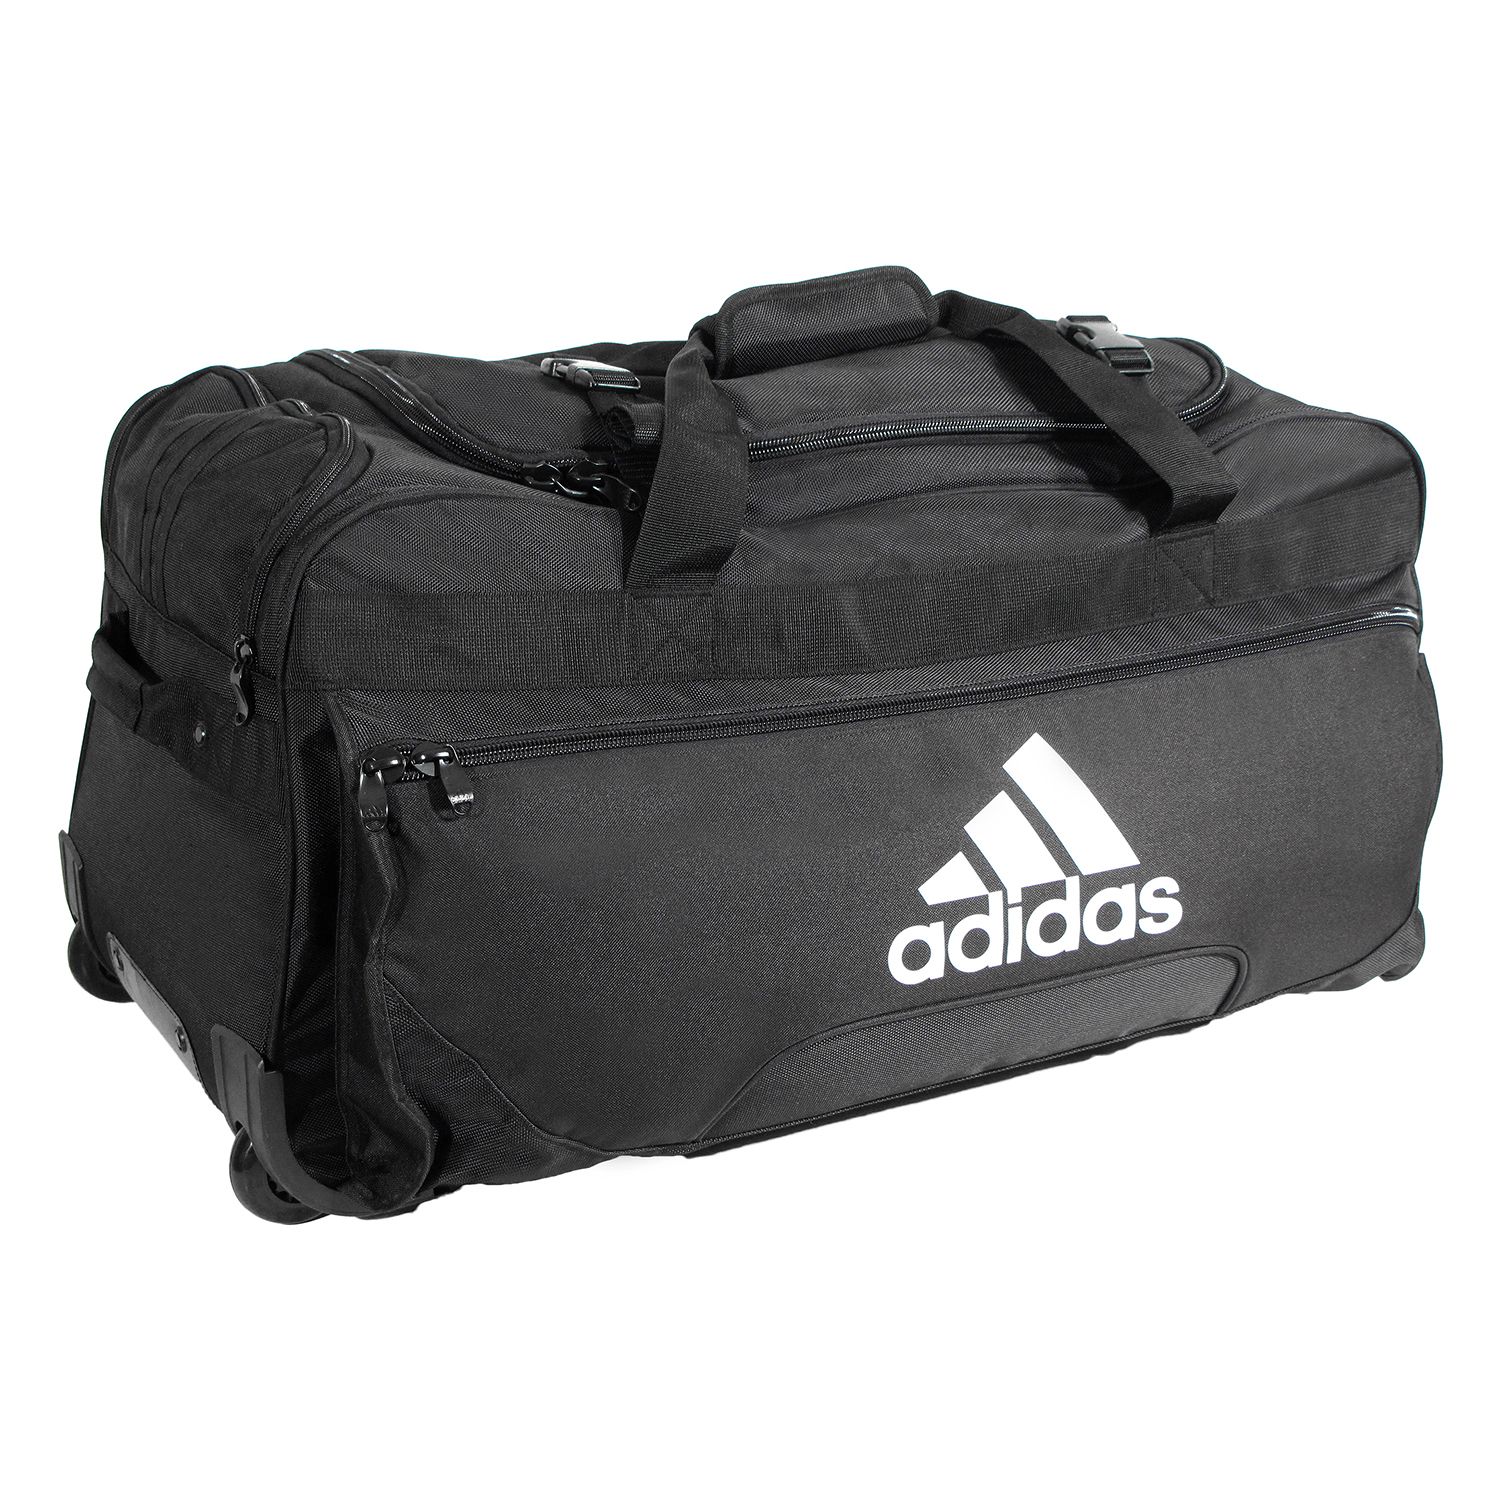 adidas wheeled team bag